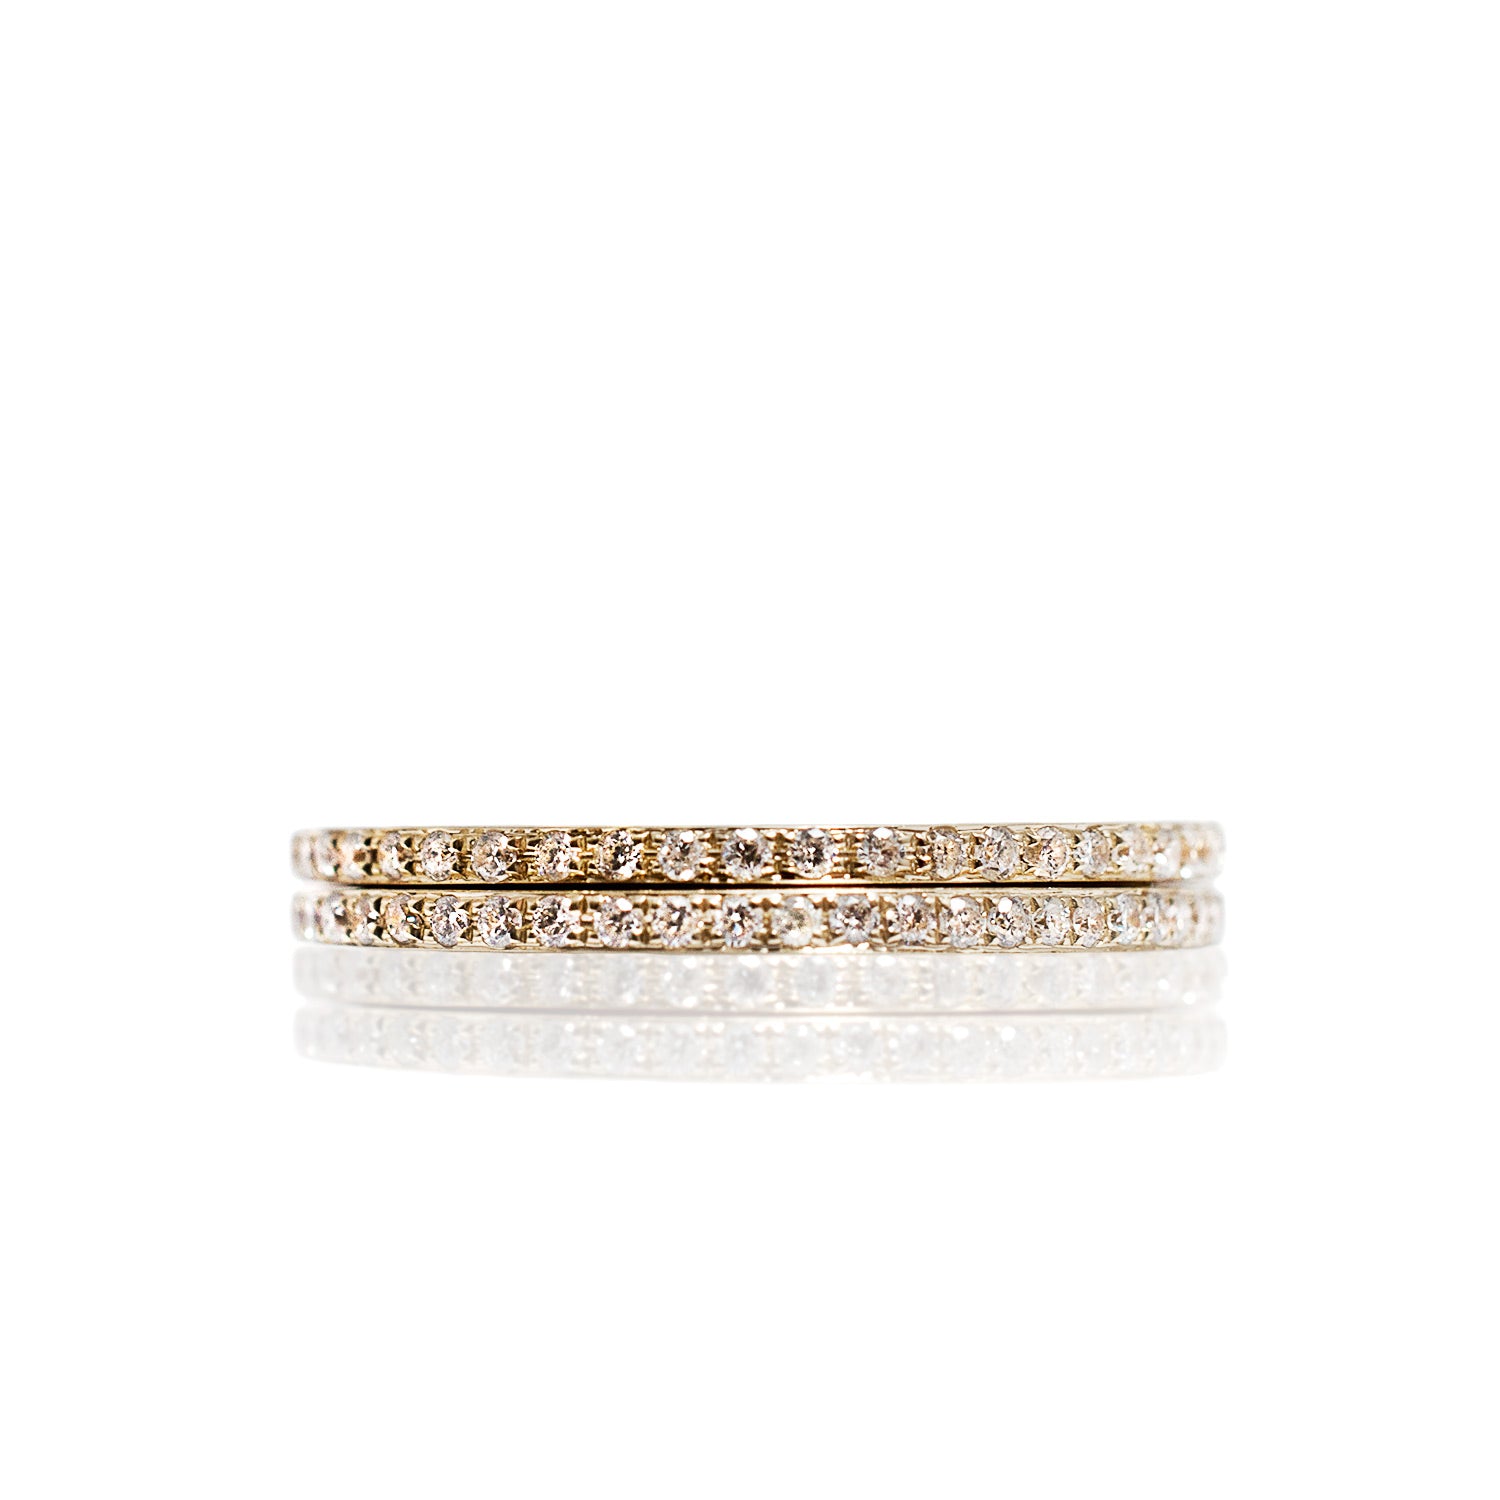 Pair of 18ct Yellow Gold Diamond Rings by McFarlane Fine Jewellery